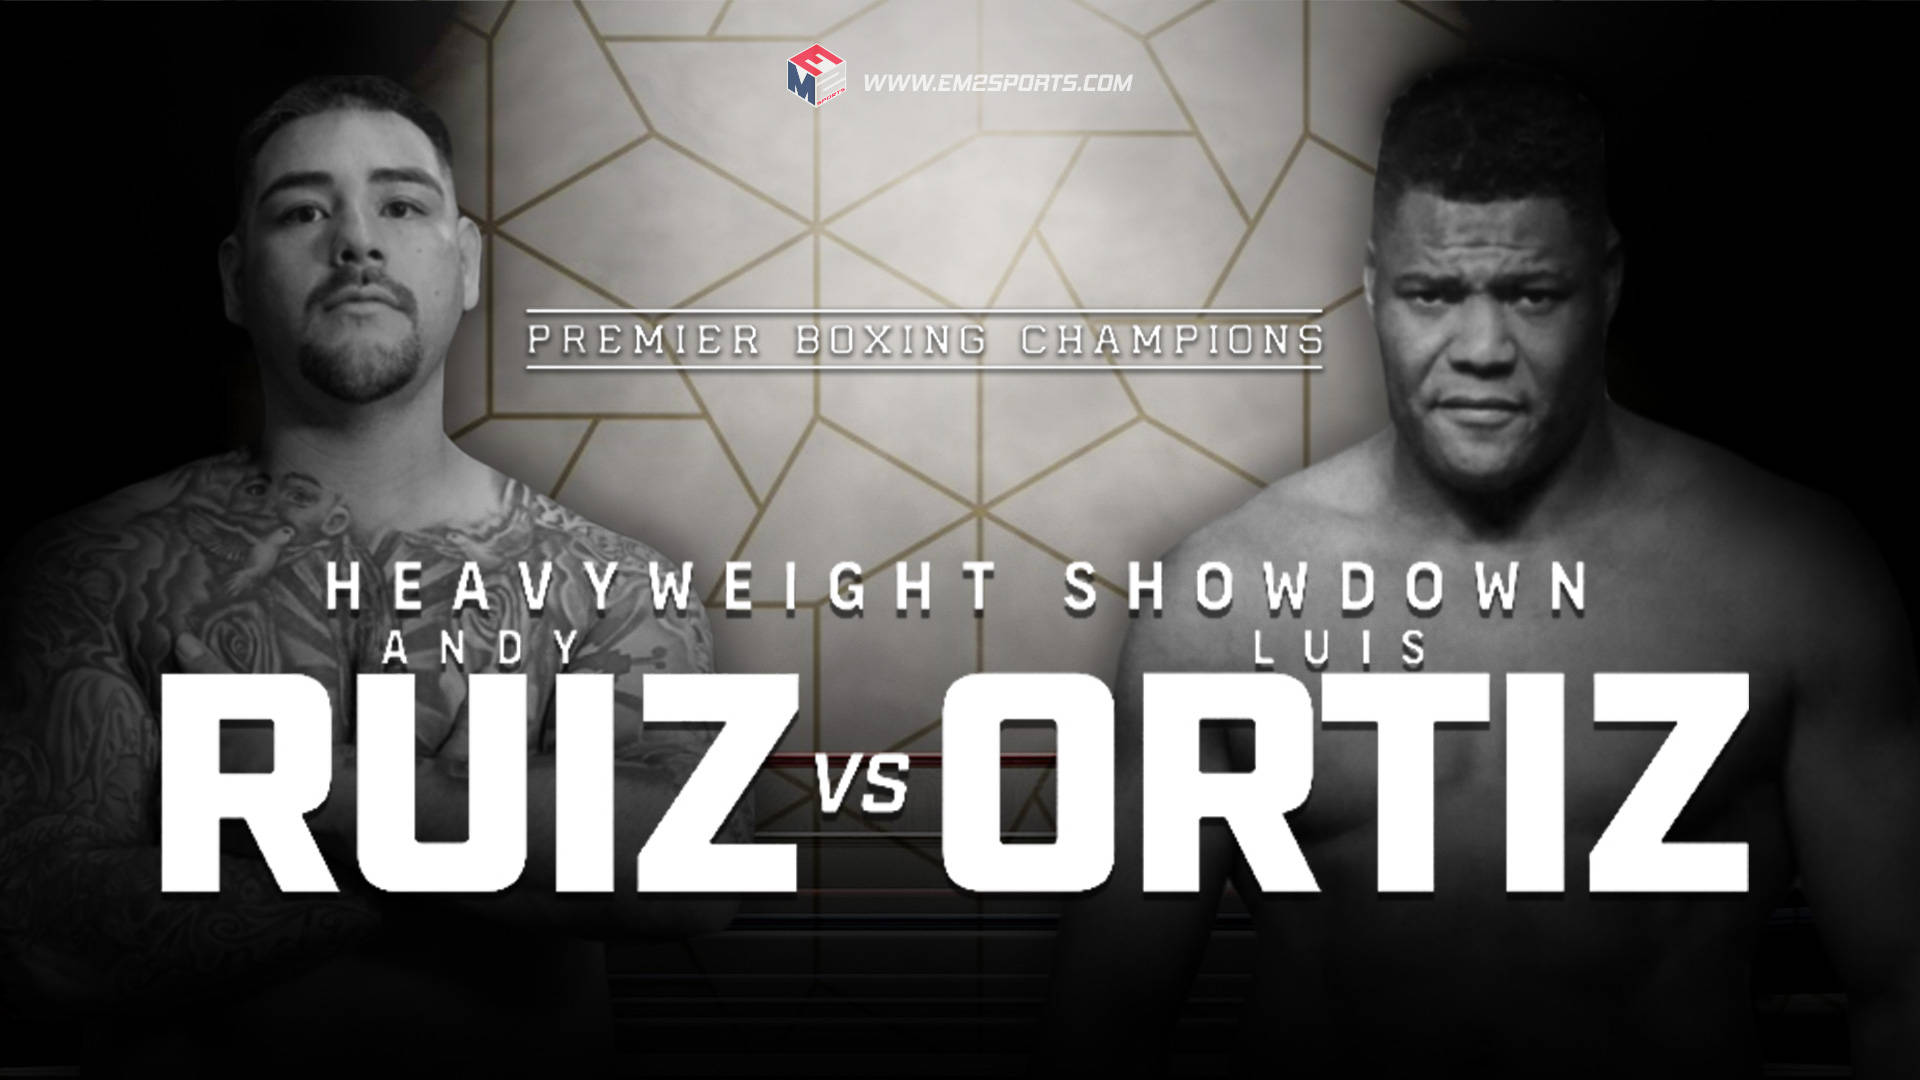 Andy Ruiz Vs Ortiz Heavyweight Showdown Background